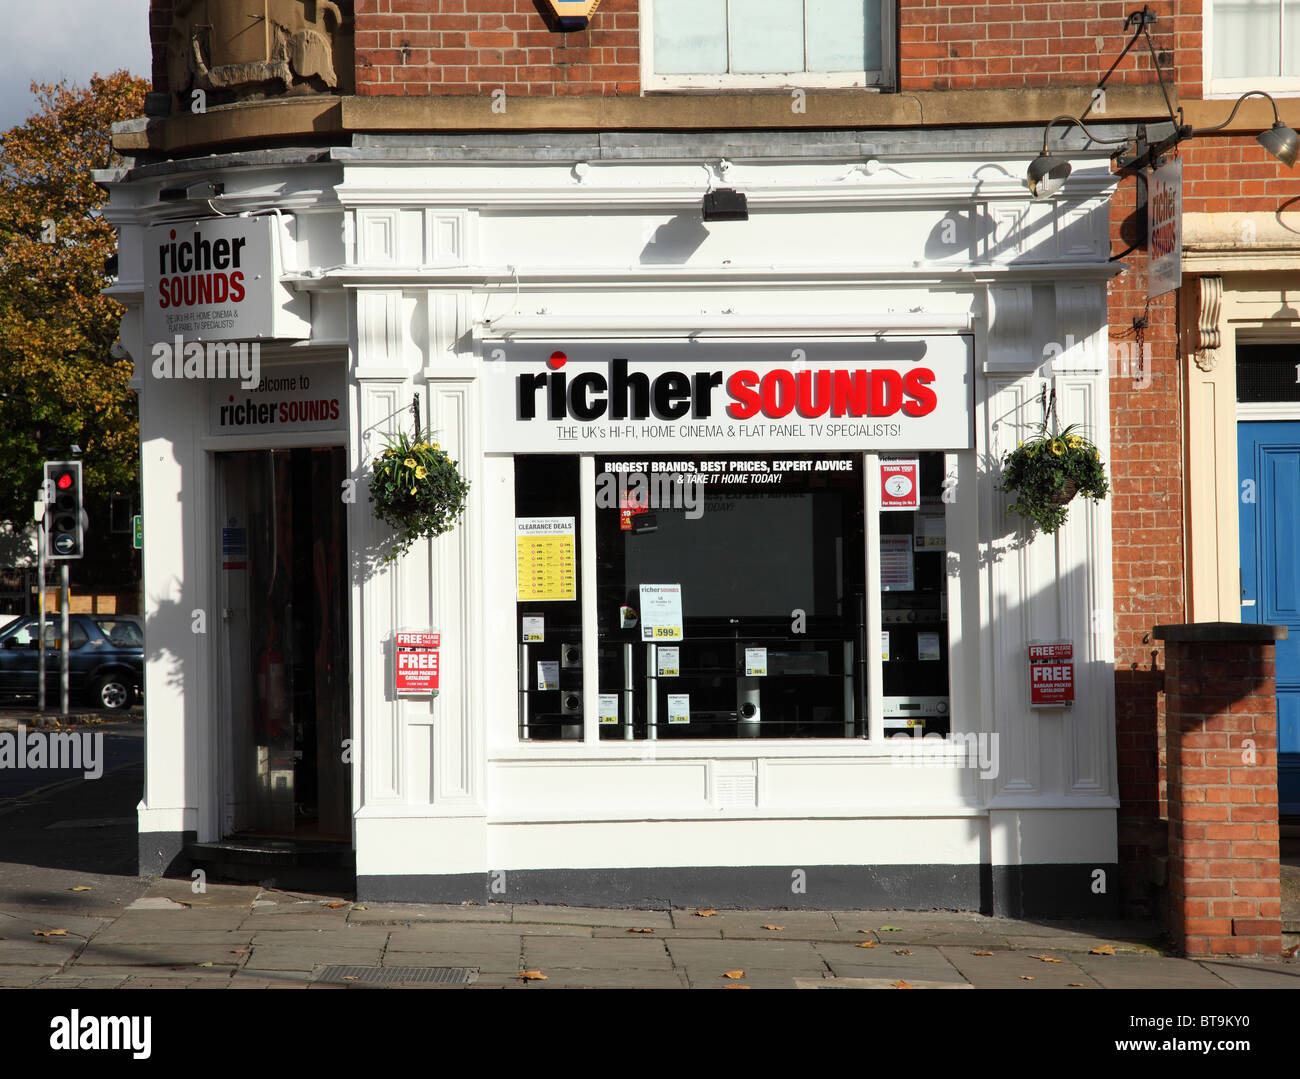 A Richer Sounds store in a U.K. city. Stock Photo